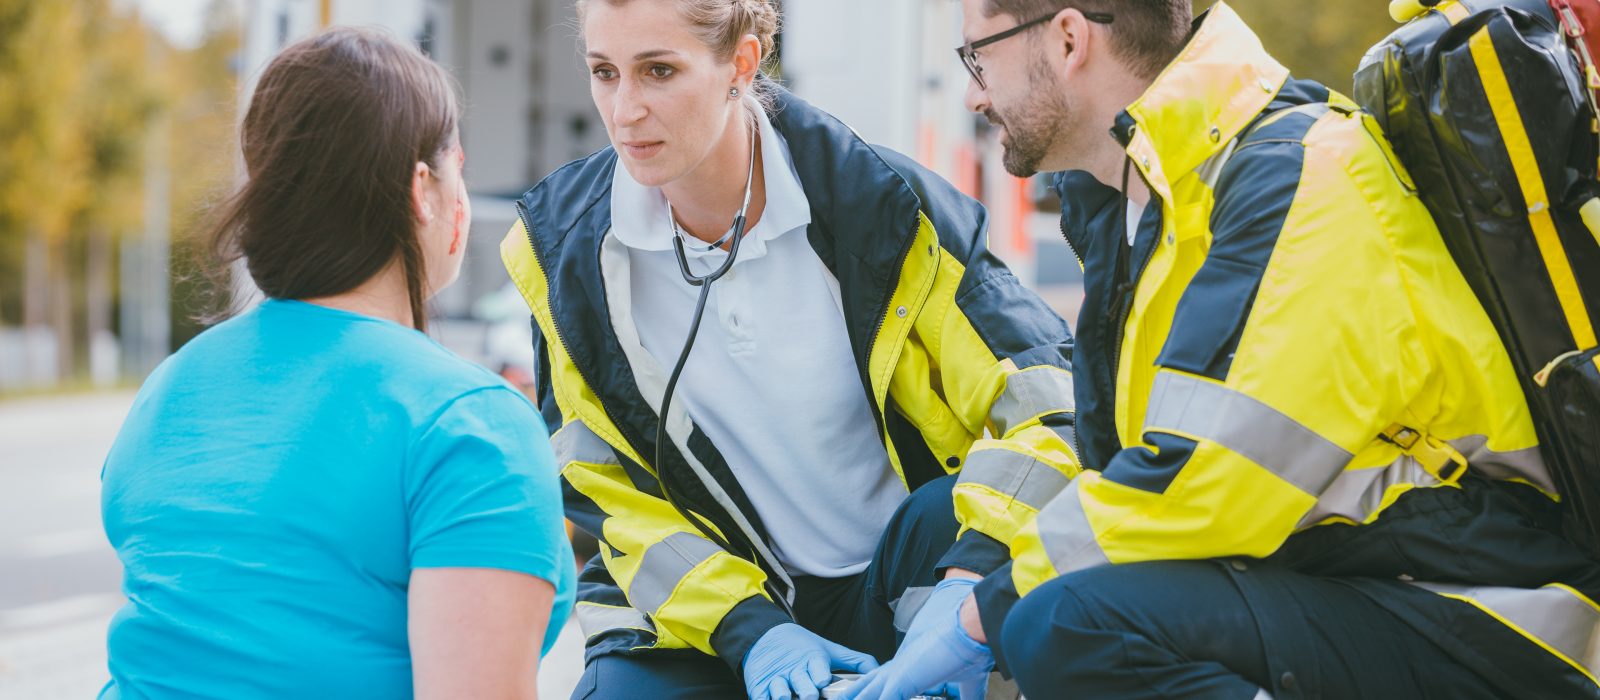 How to get a EMT or paramedic job